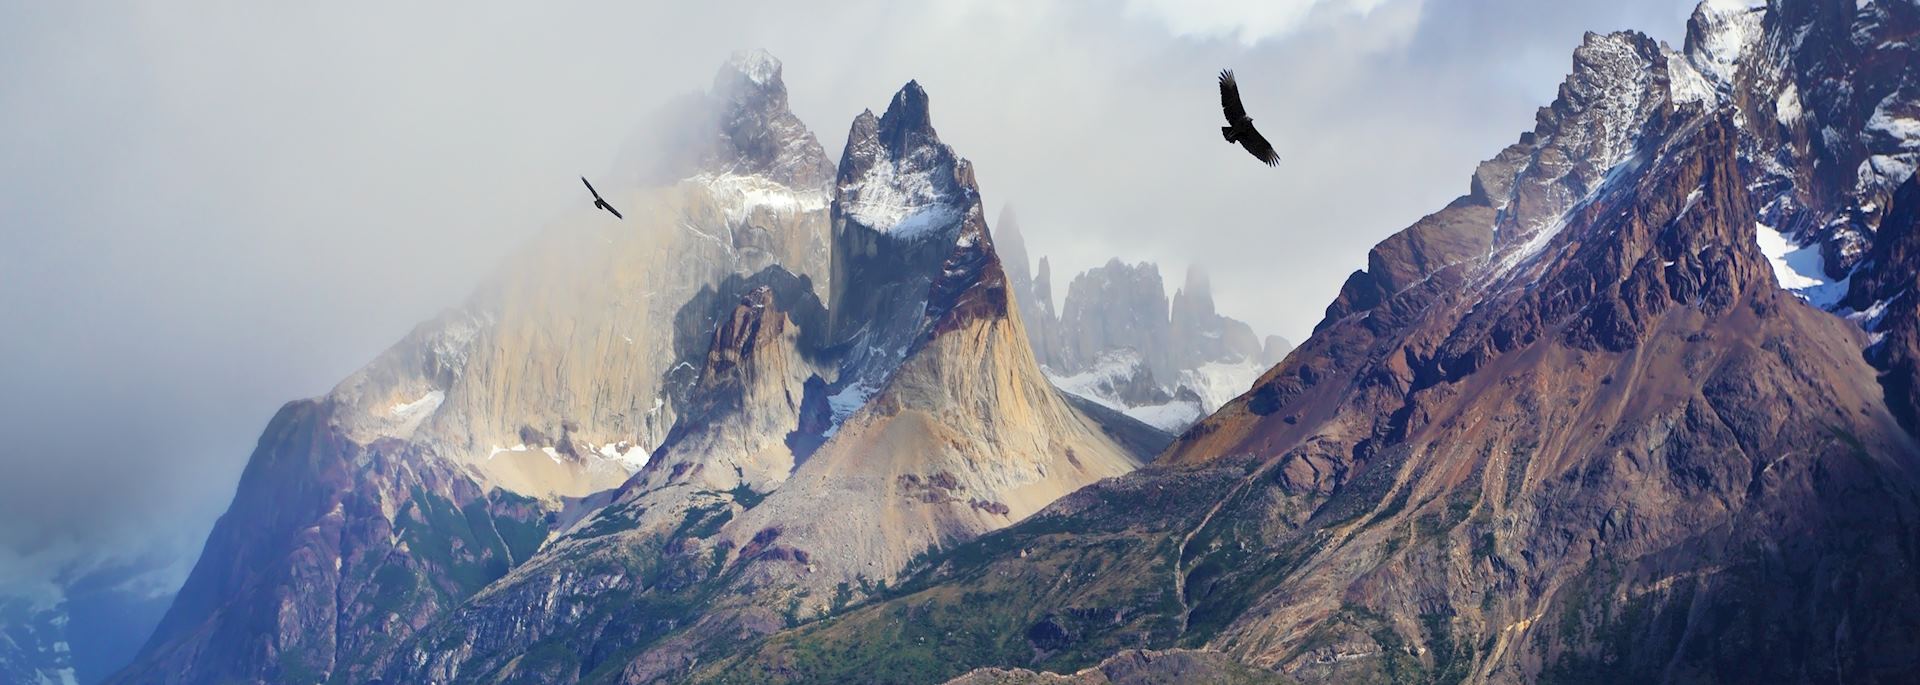 Andean condors in Torres del Paine